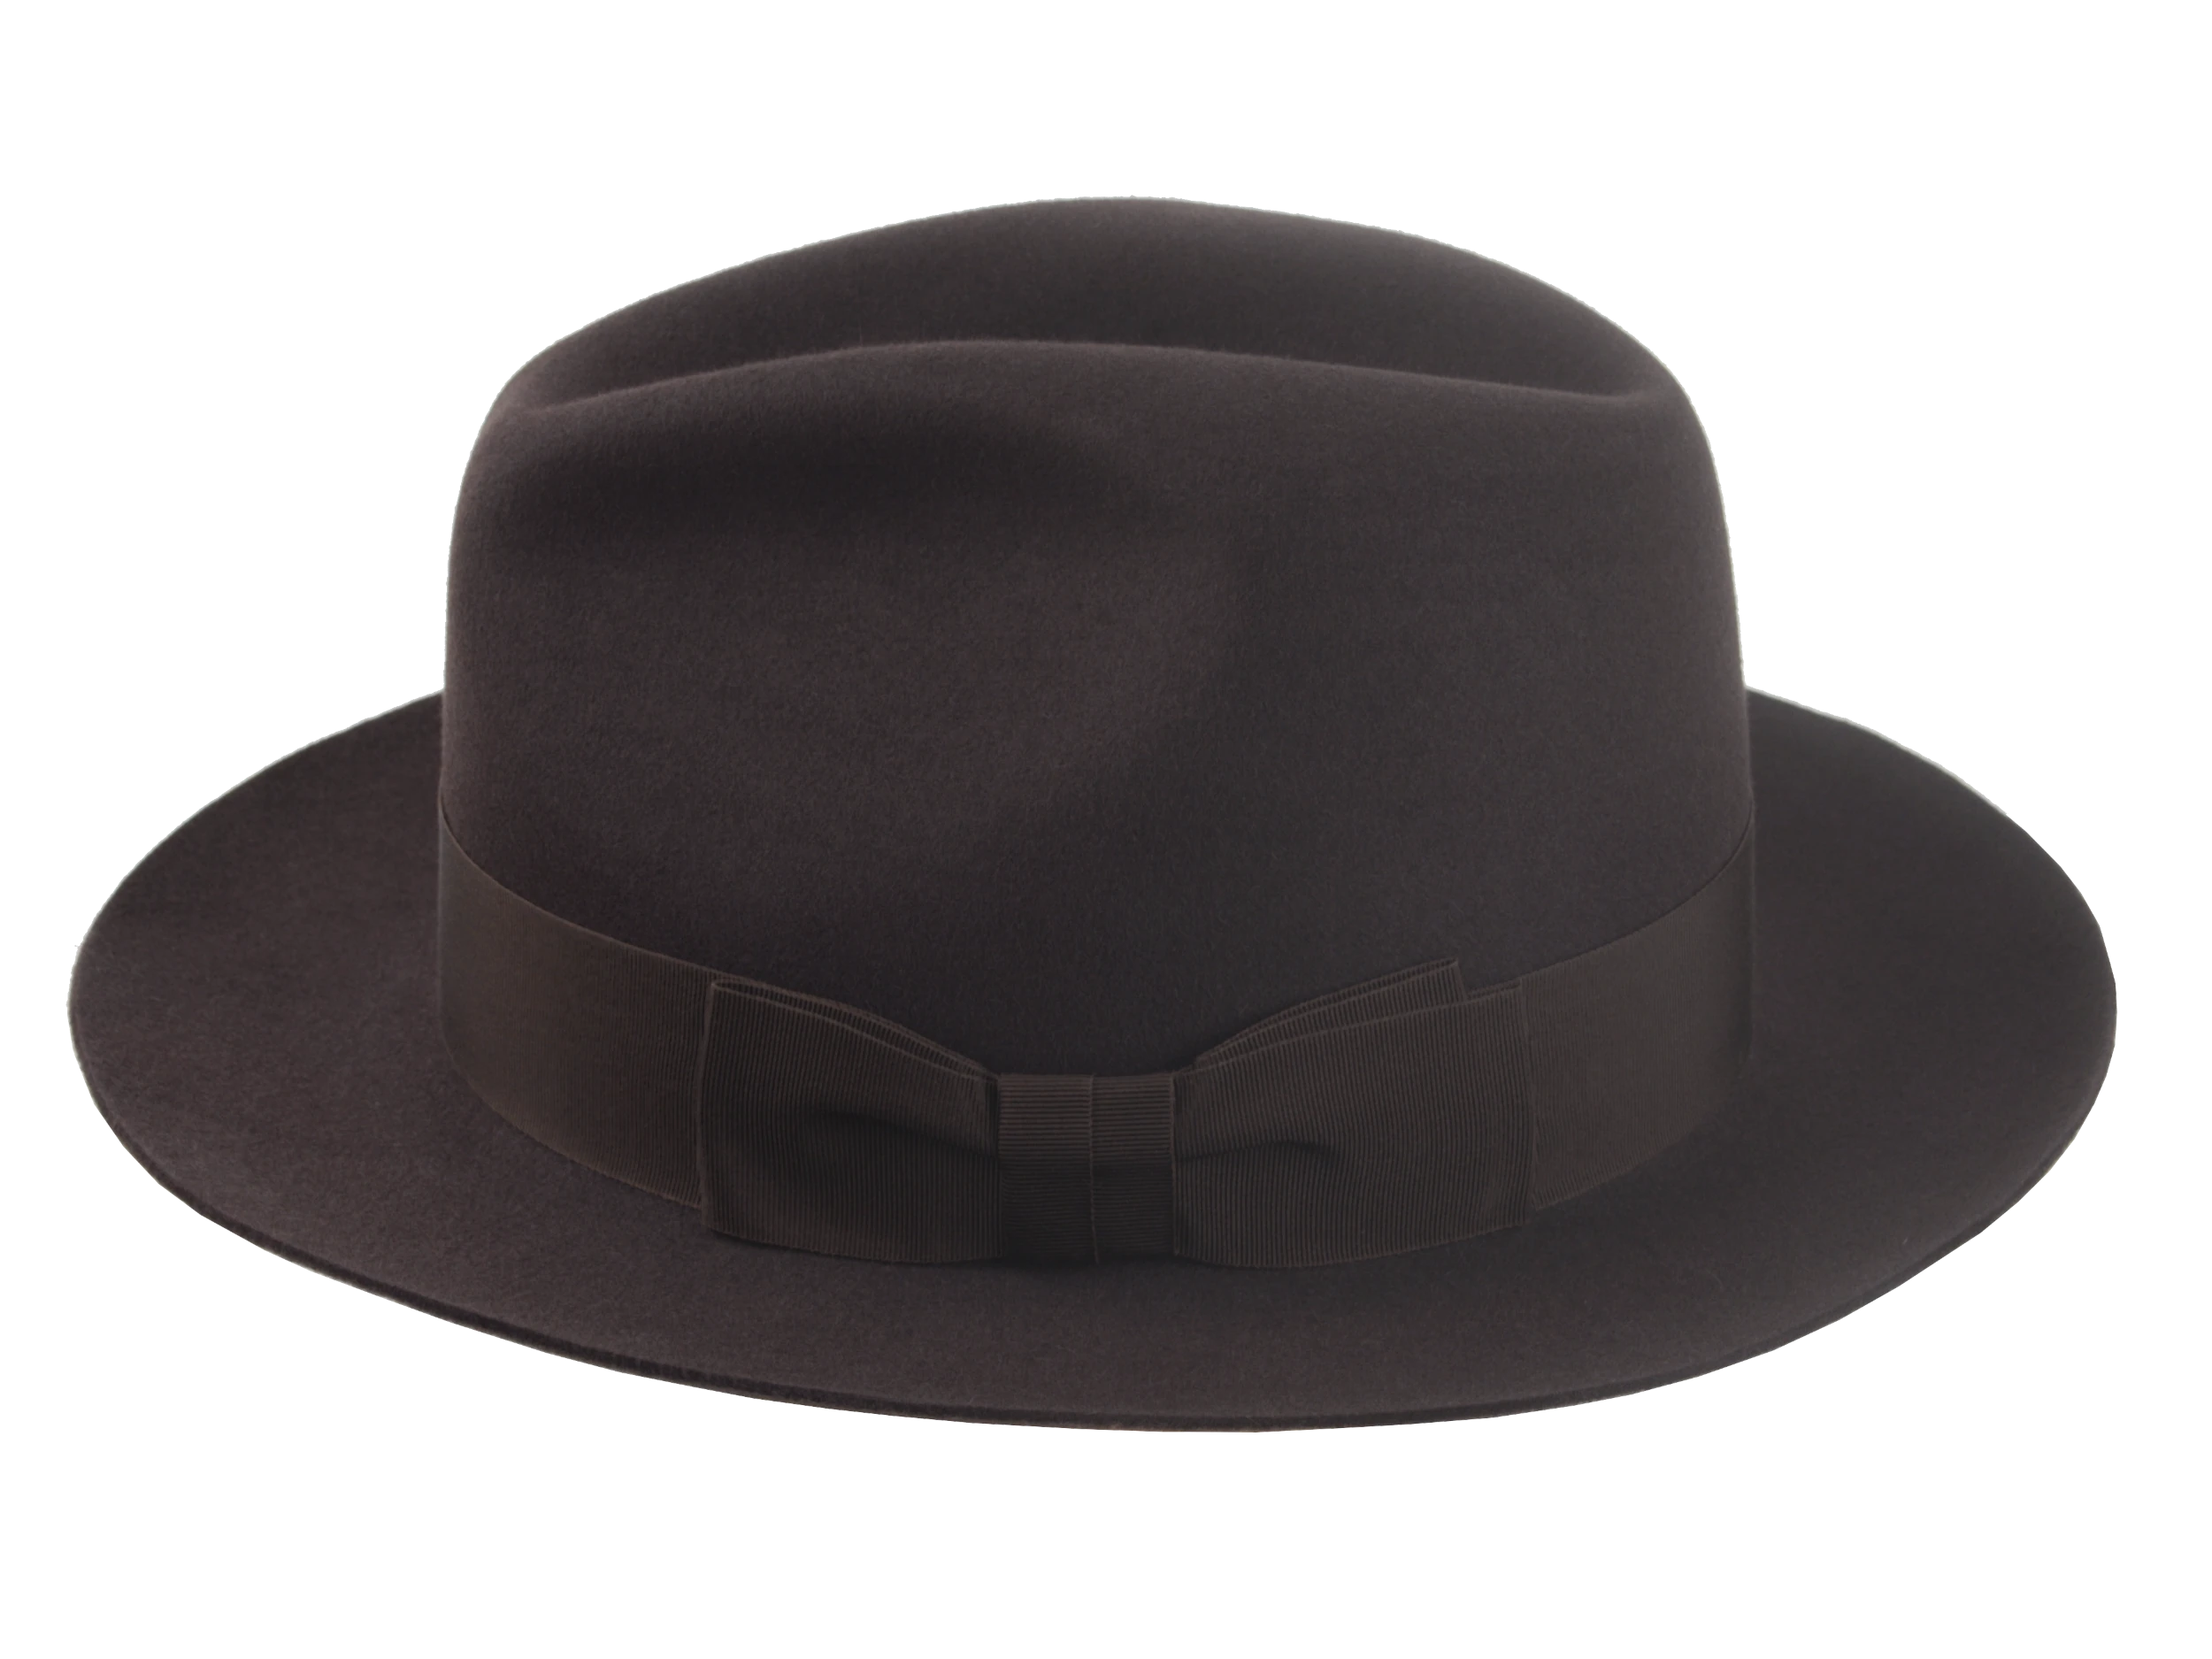 The Acropol: Focus on the 1 1/2" grosgrain ribbon hatband, adding elegance | Agnoulita Hats